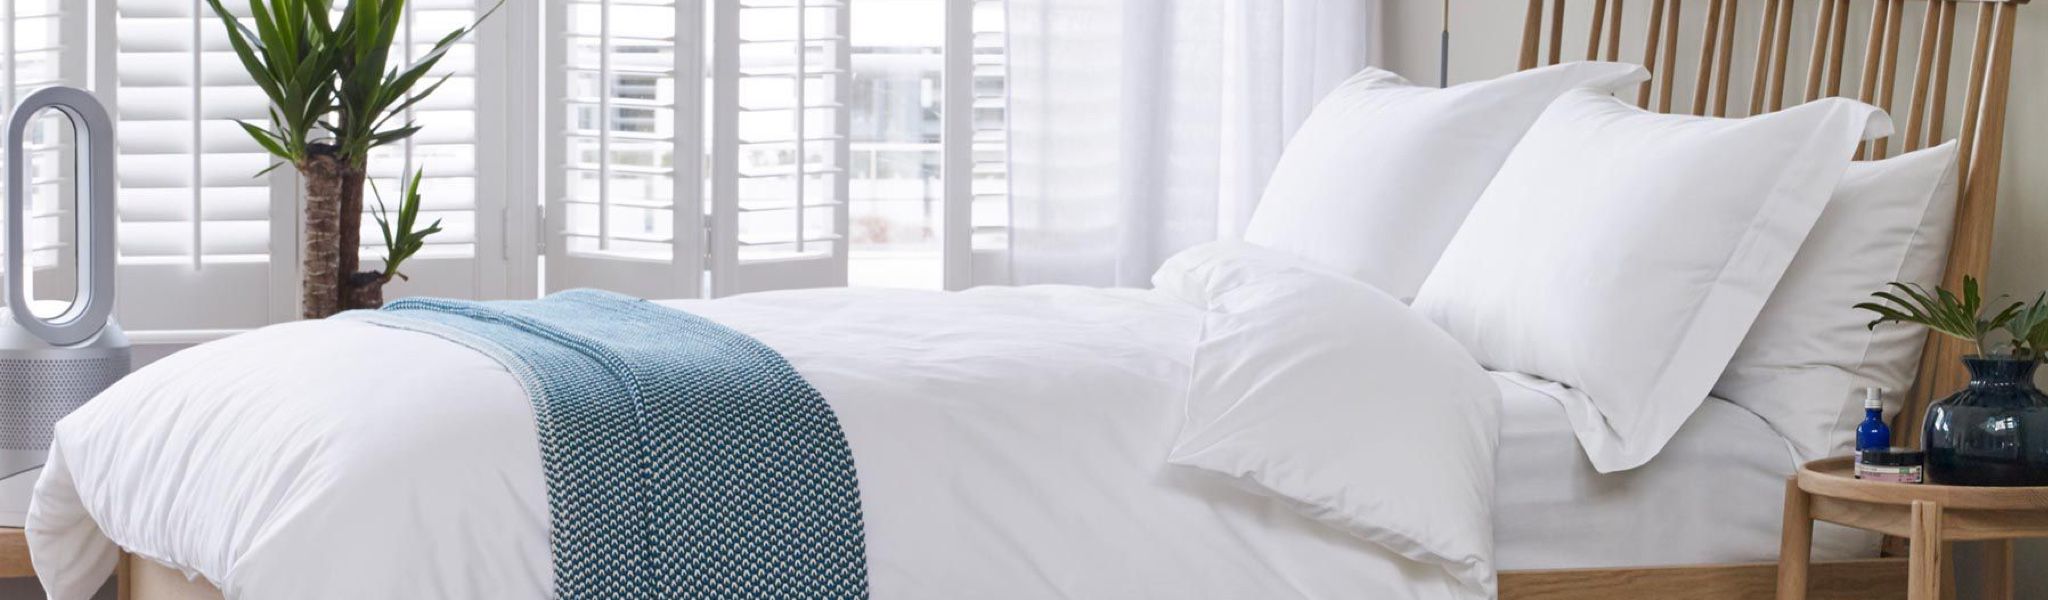 Choosing The Right Bed Linen, Standard Uk Single Duvet Cover Size Guide